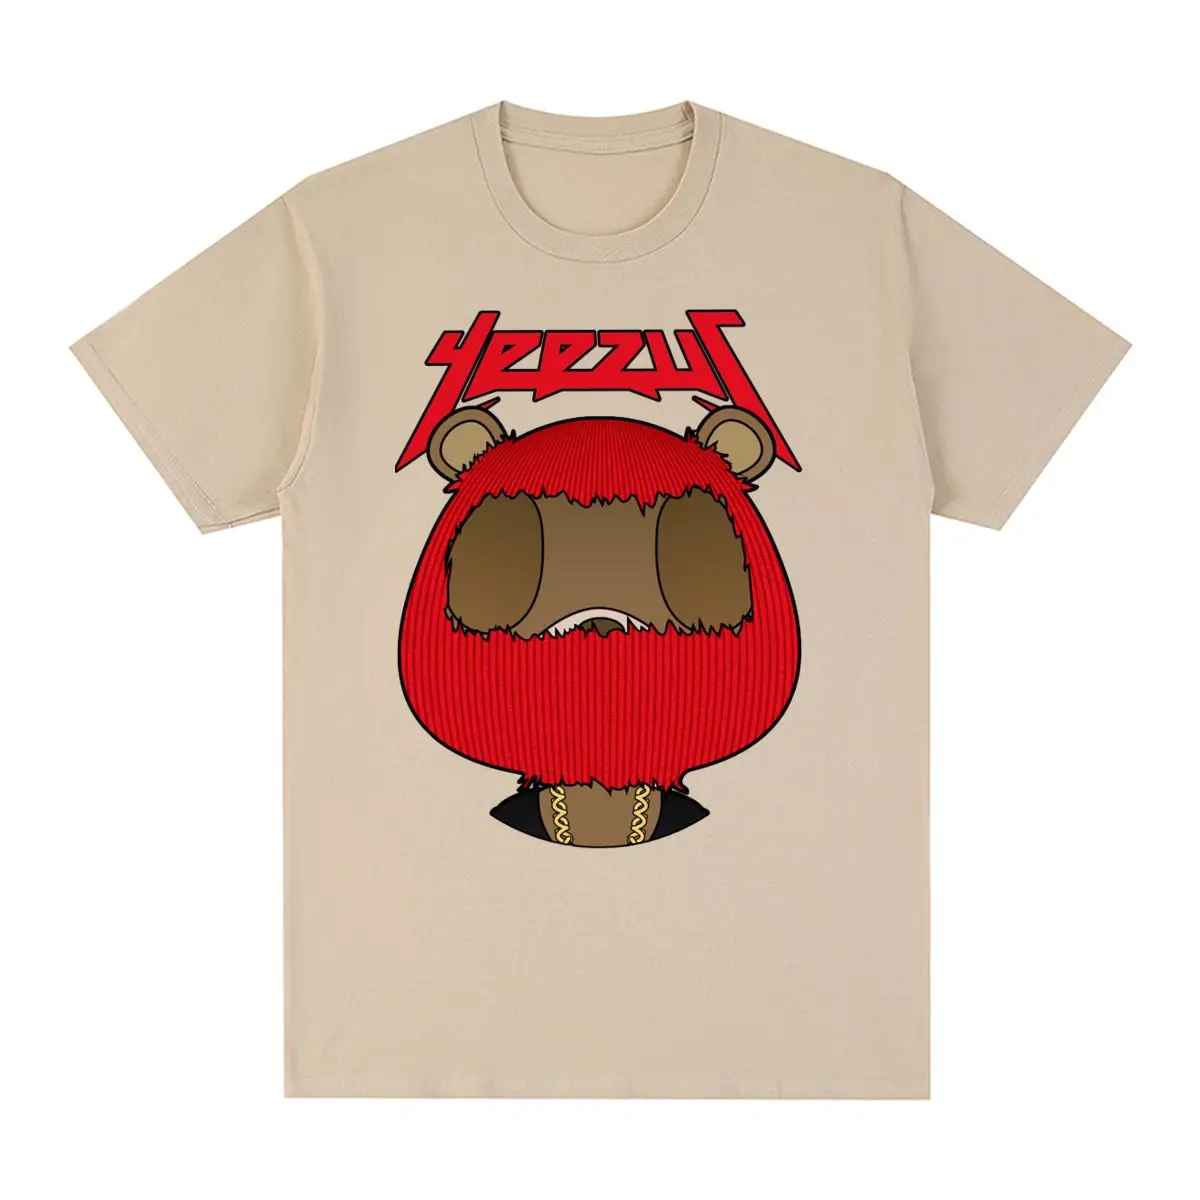 Kanye West Vintage T-shirt Tour Commemorative Printed Retro Harajuku Cotton Men T shirt New Tee Tshirt Womens Tops